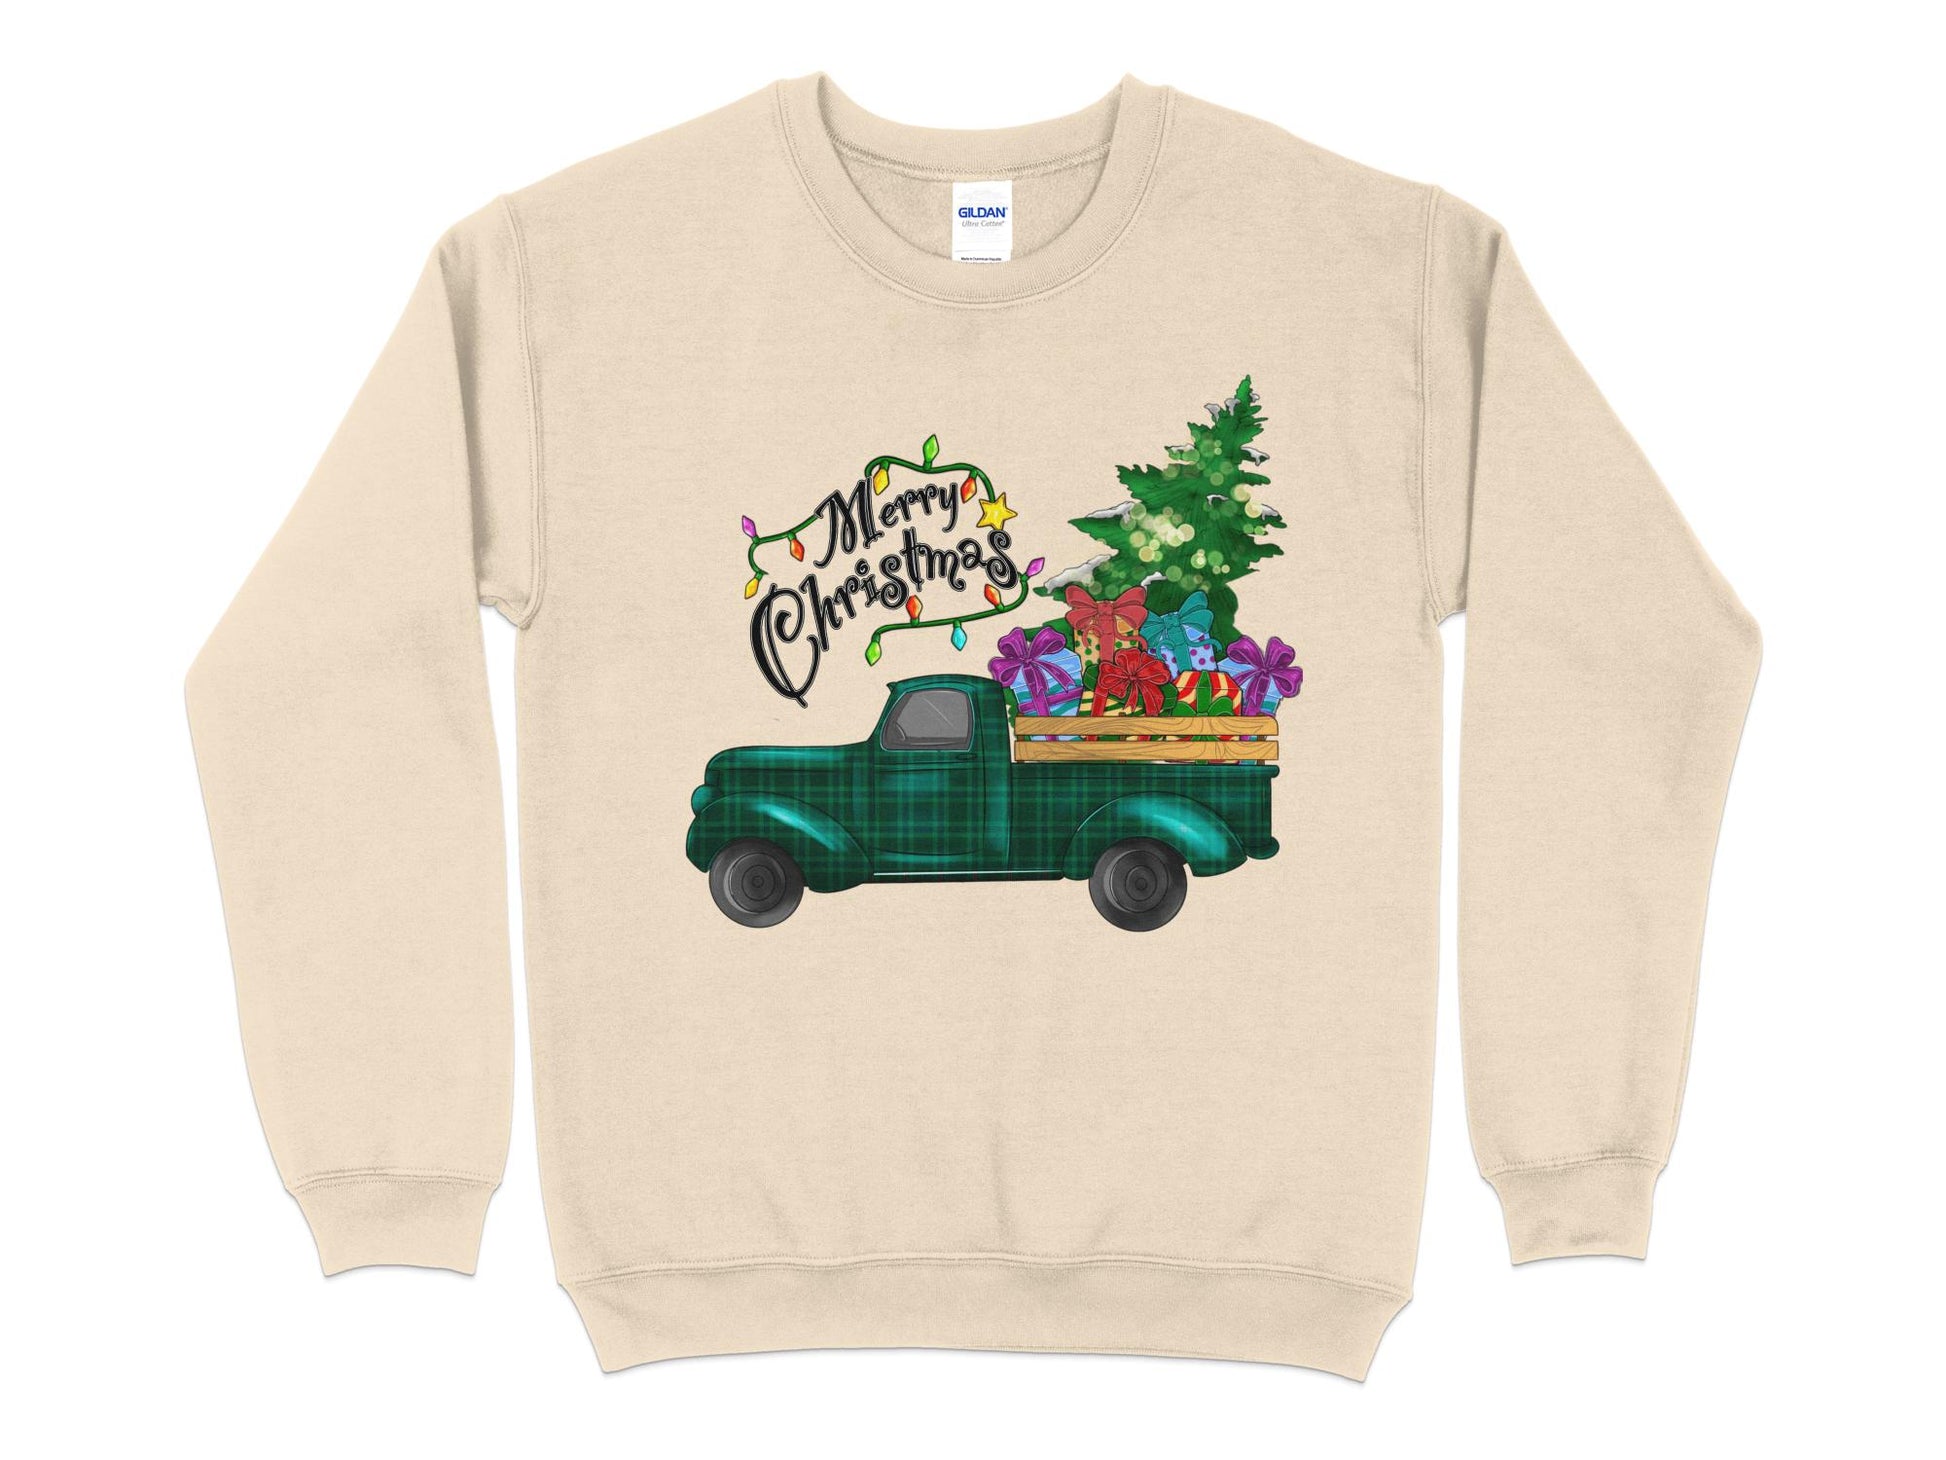 Merry Christmas Plaid Truck Shirt, Christmas Sweatshirt, Christmas Family Matching, Xmas Top, Holiday top for Women, Women's Xmas shirt - Mardonyx Sweatshirt S / Sand